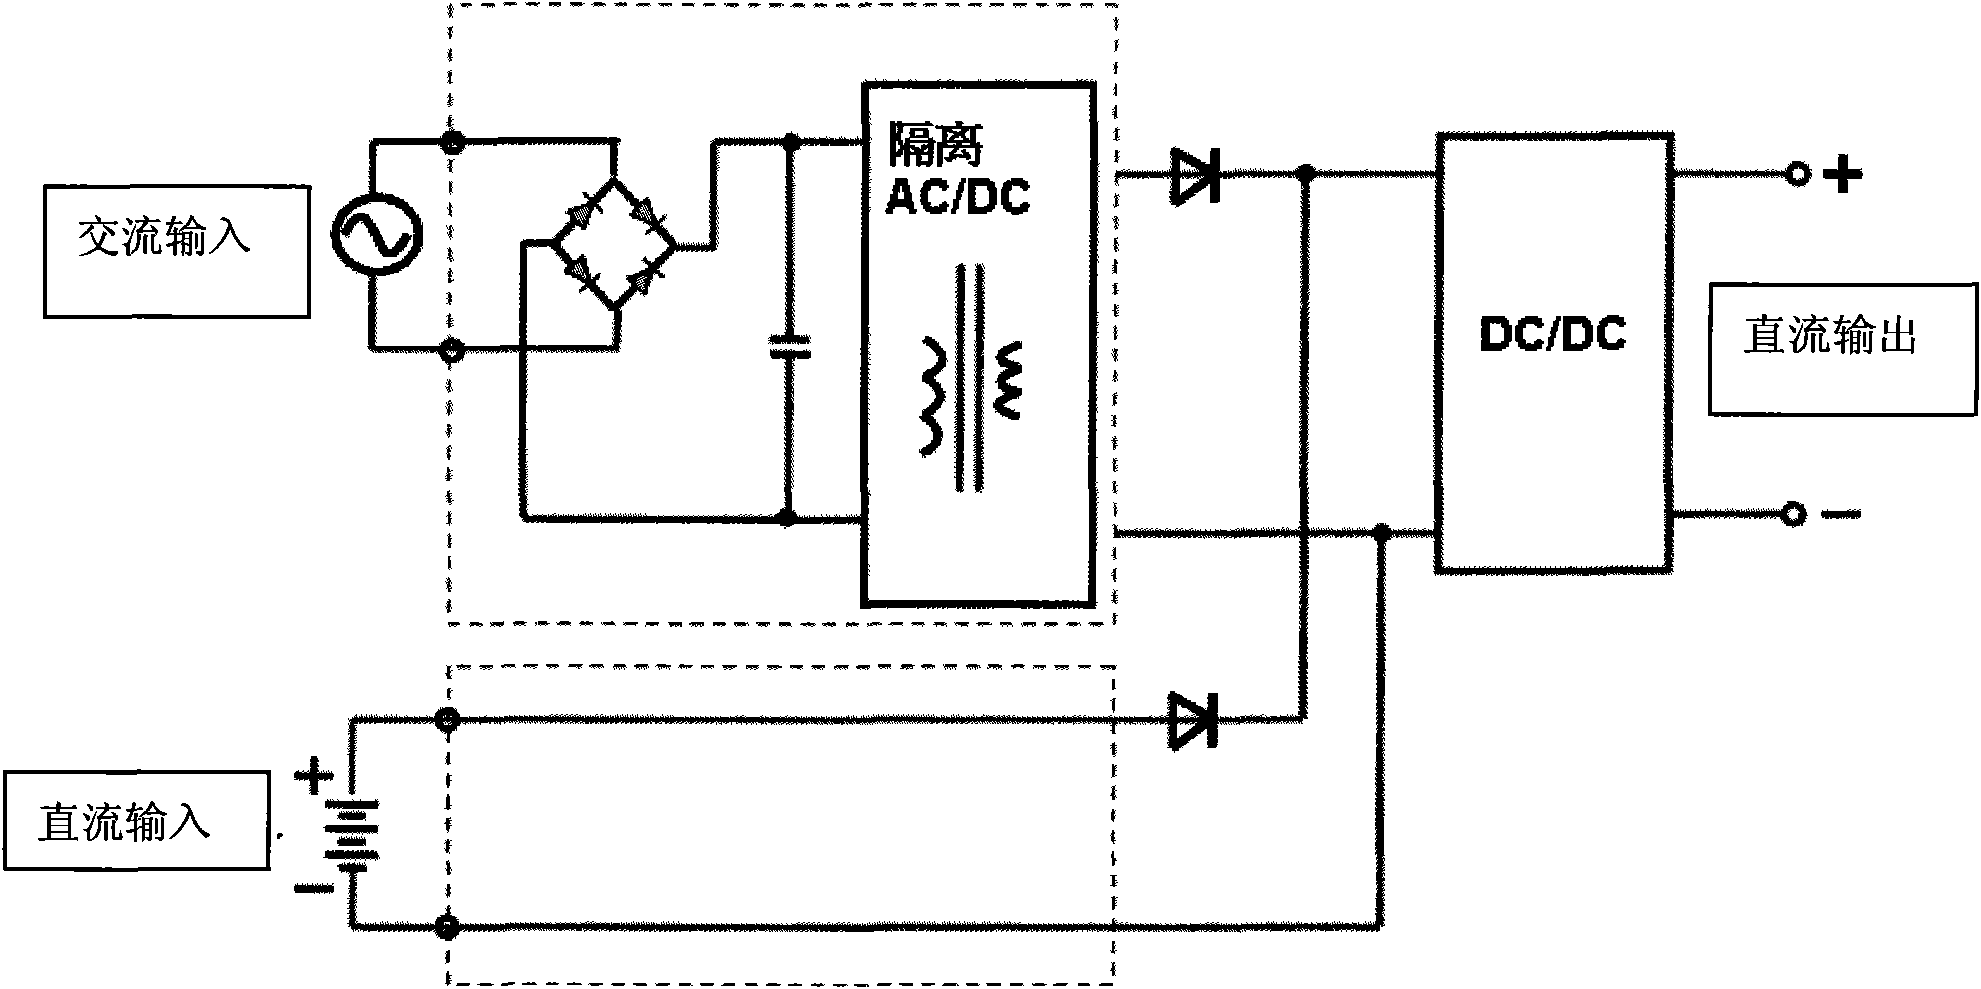 Method for building industrial AC/DC wide range input power module